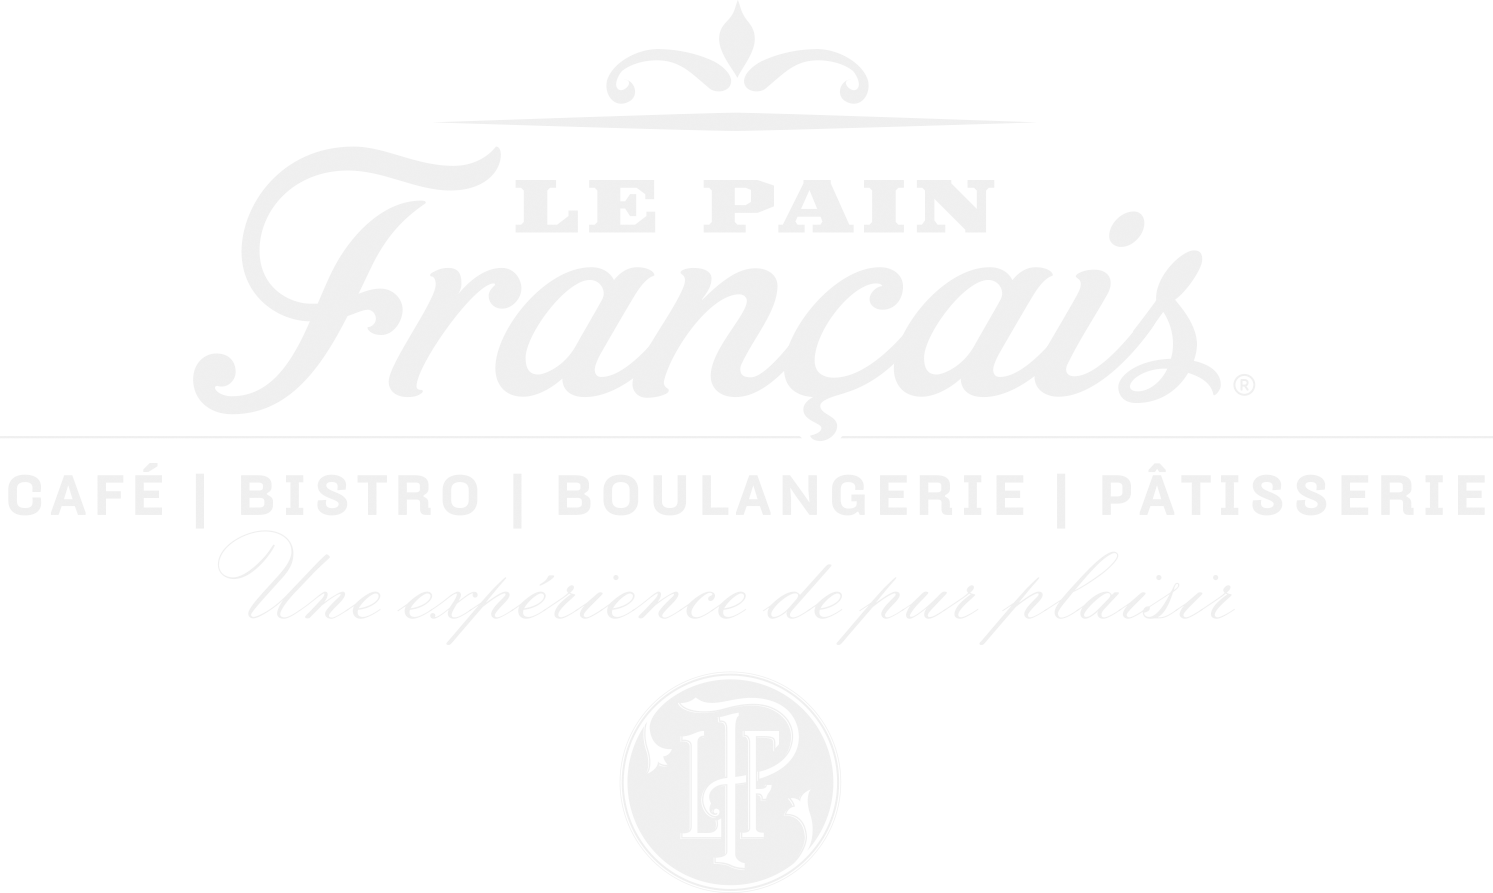 Le Pain Francais – Restaurang,  café, bistro, konditori, bageri och nattklubb i Göteborg